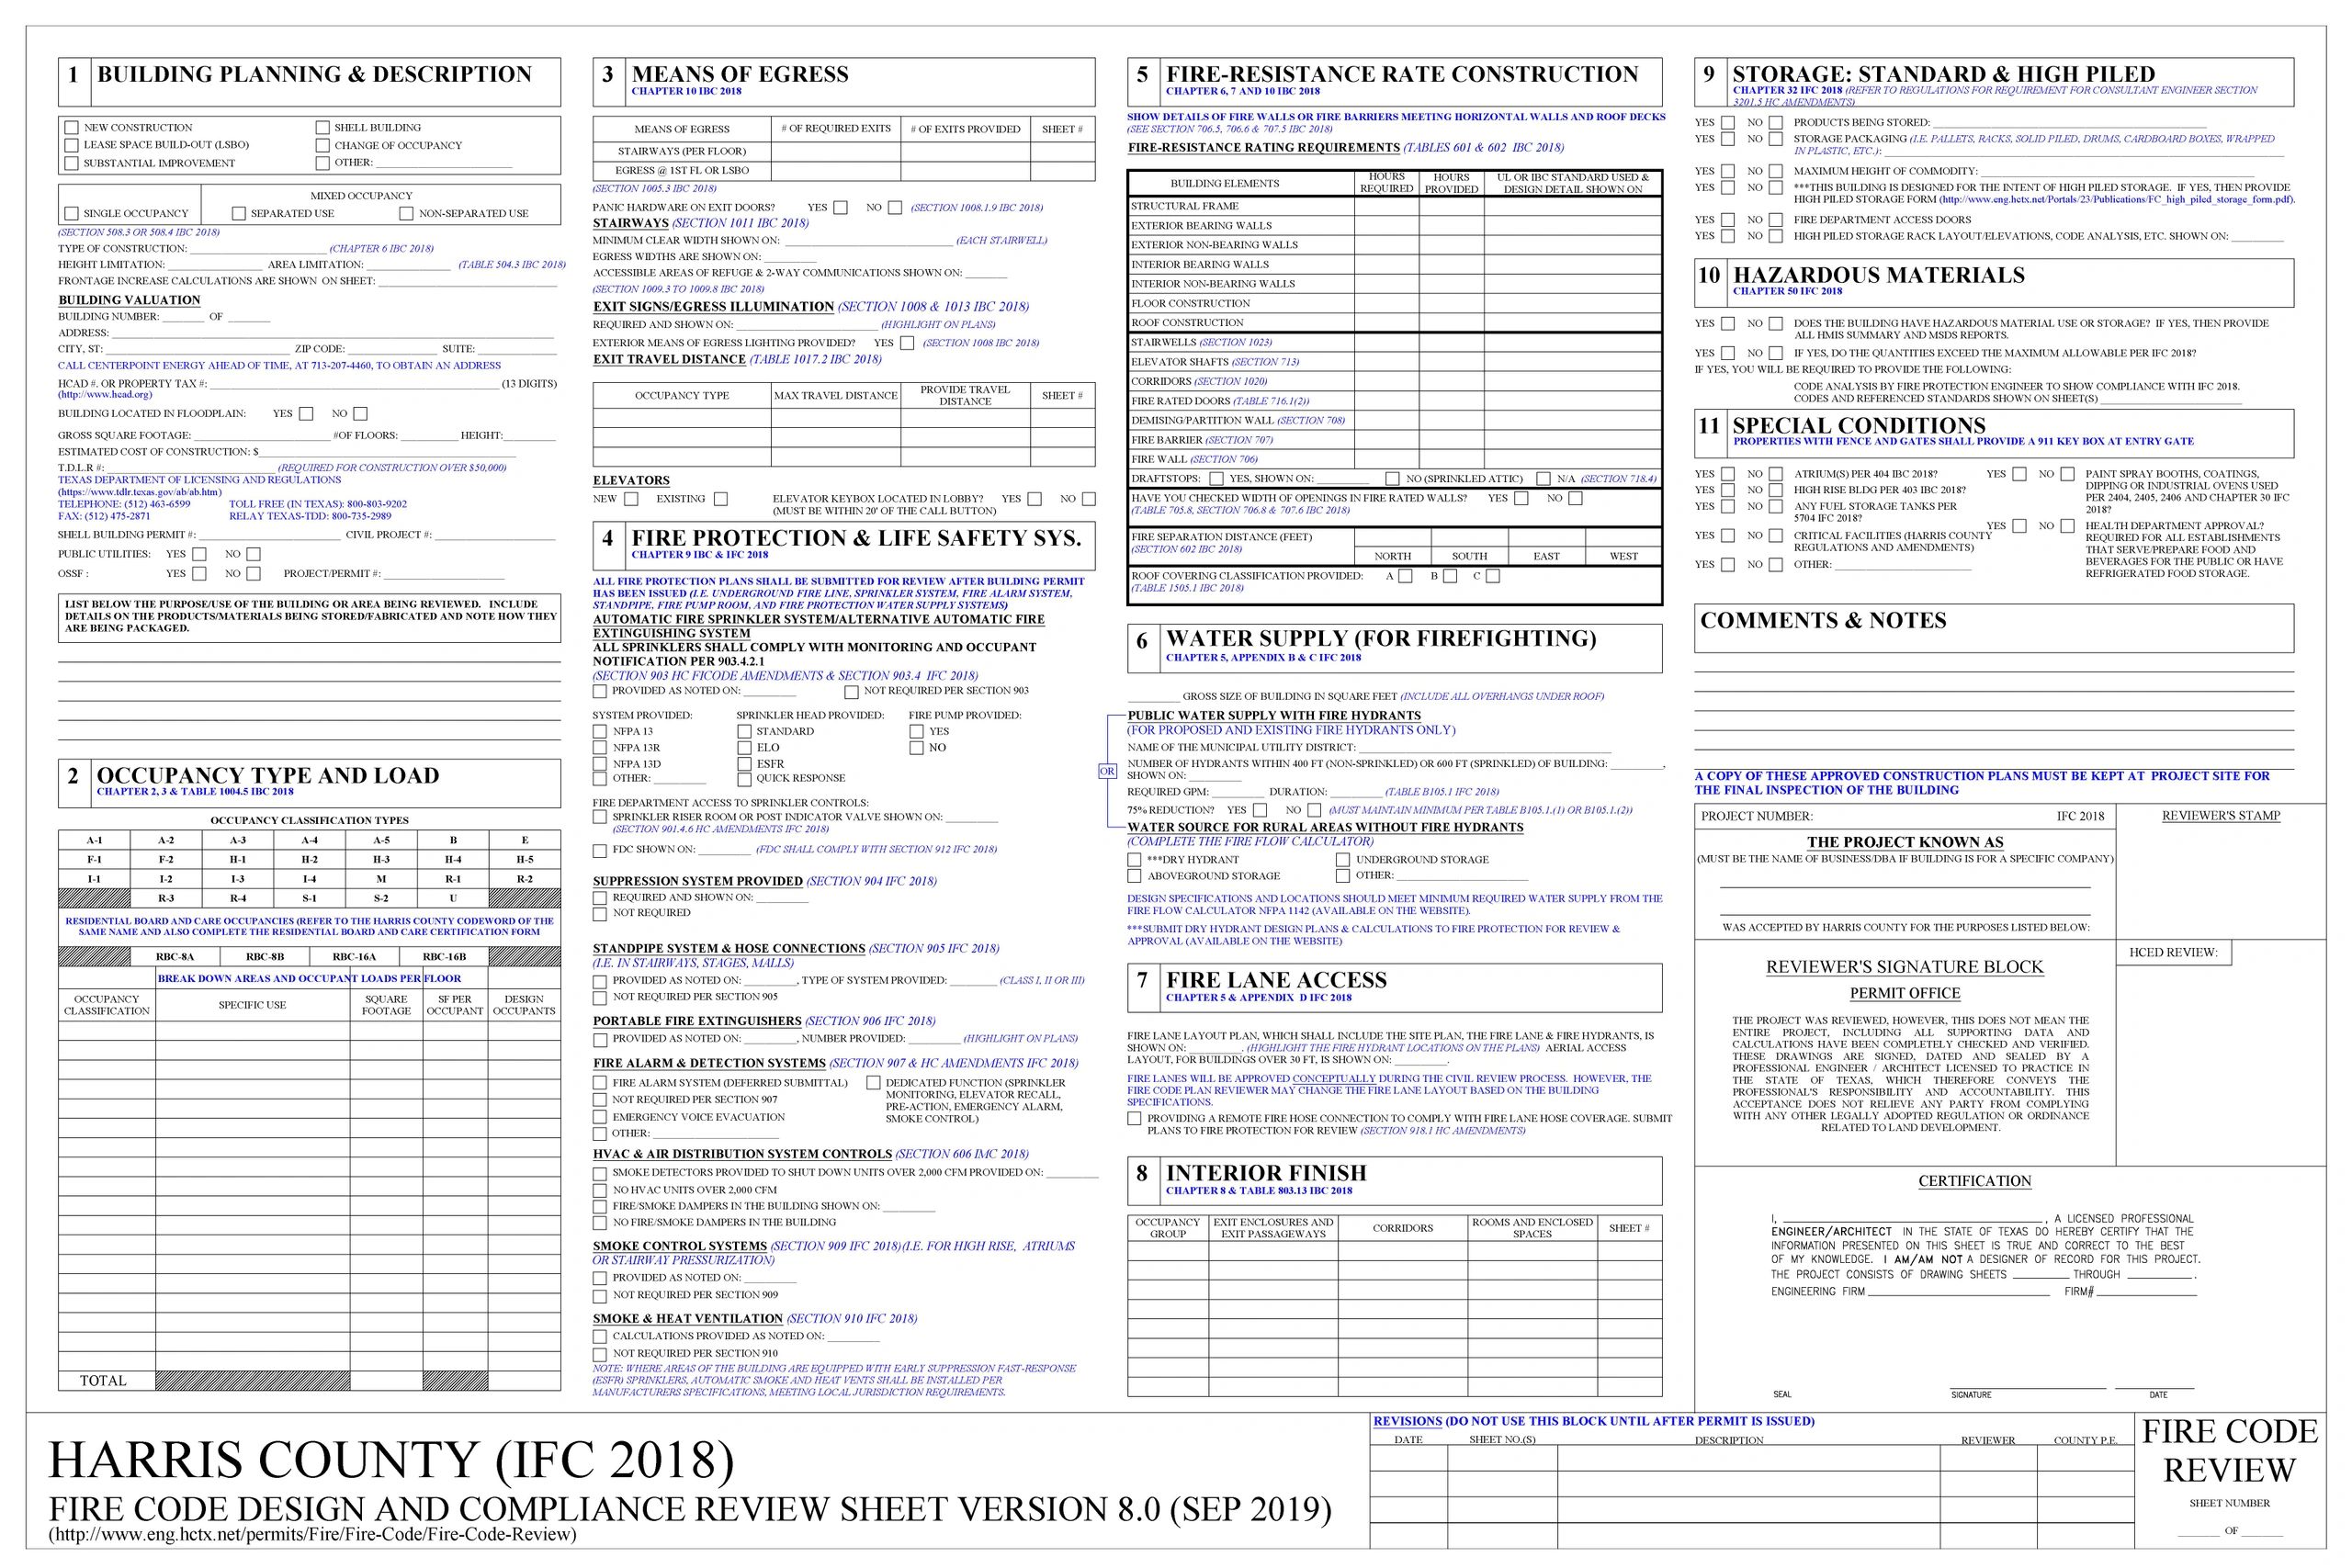 Harris County Fire Code Review Sheet Version 8.0